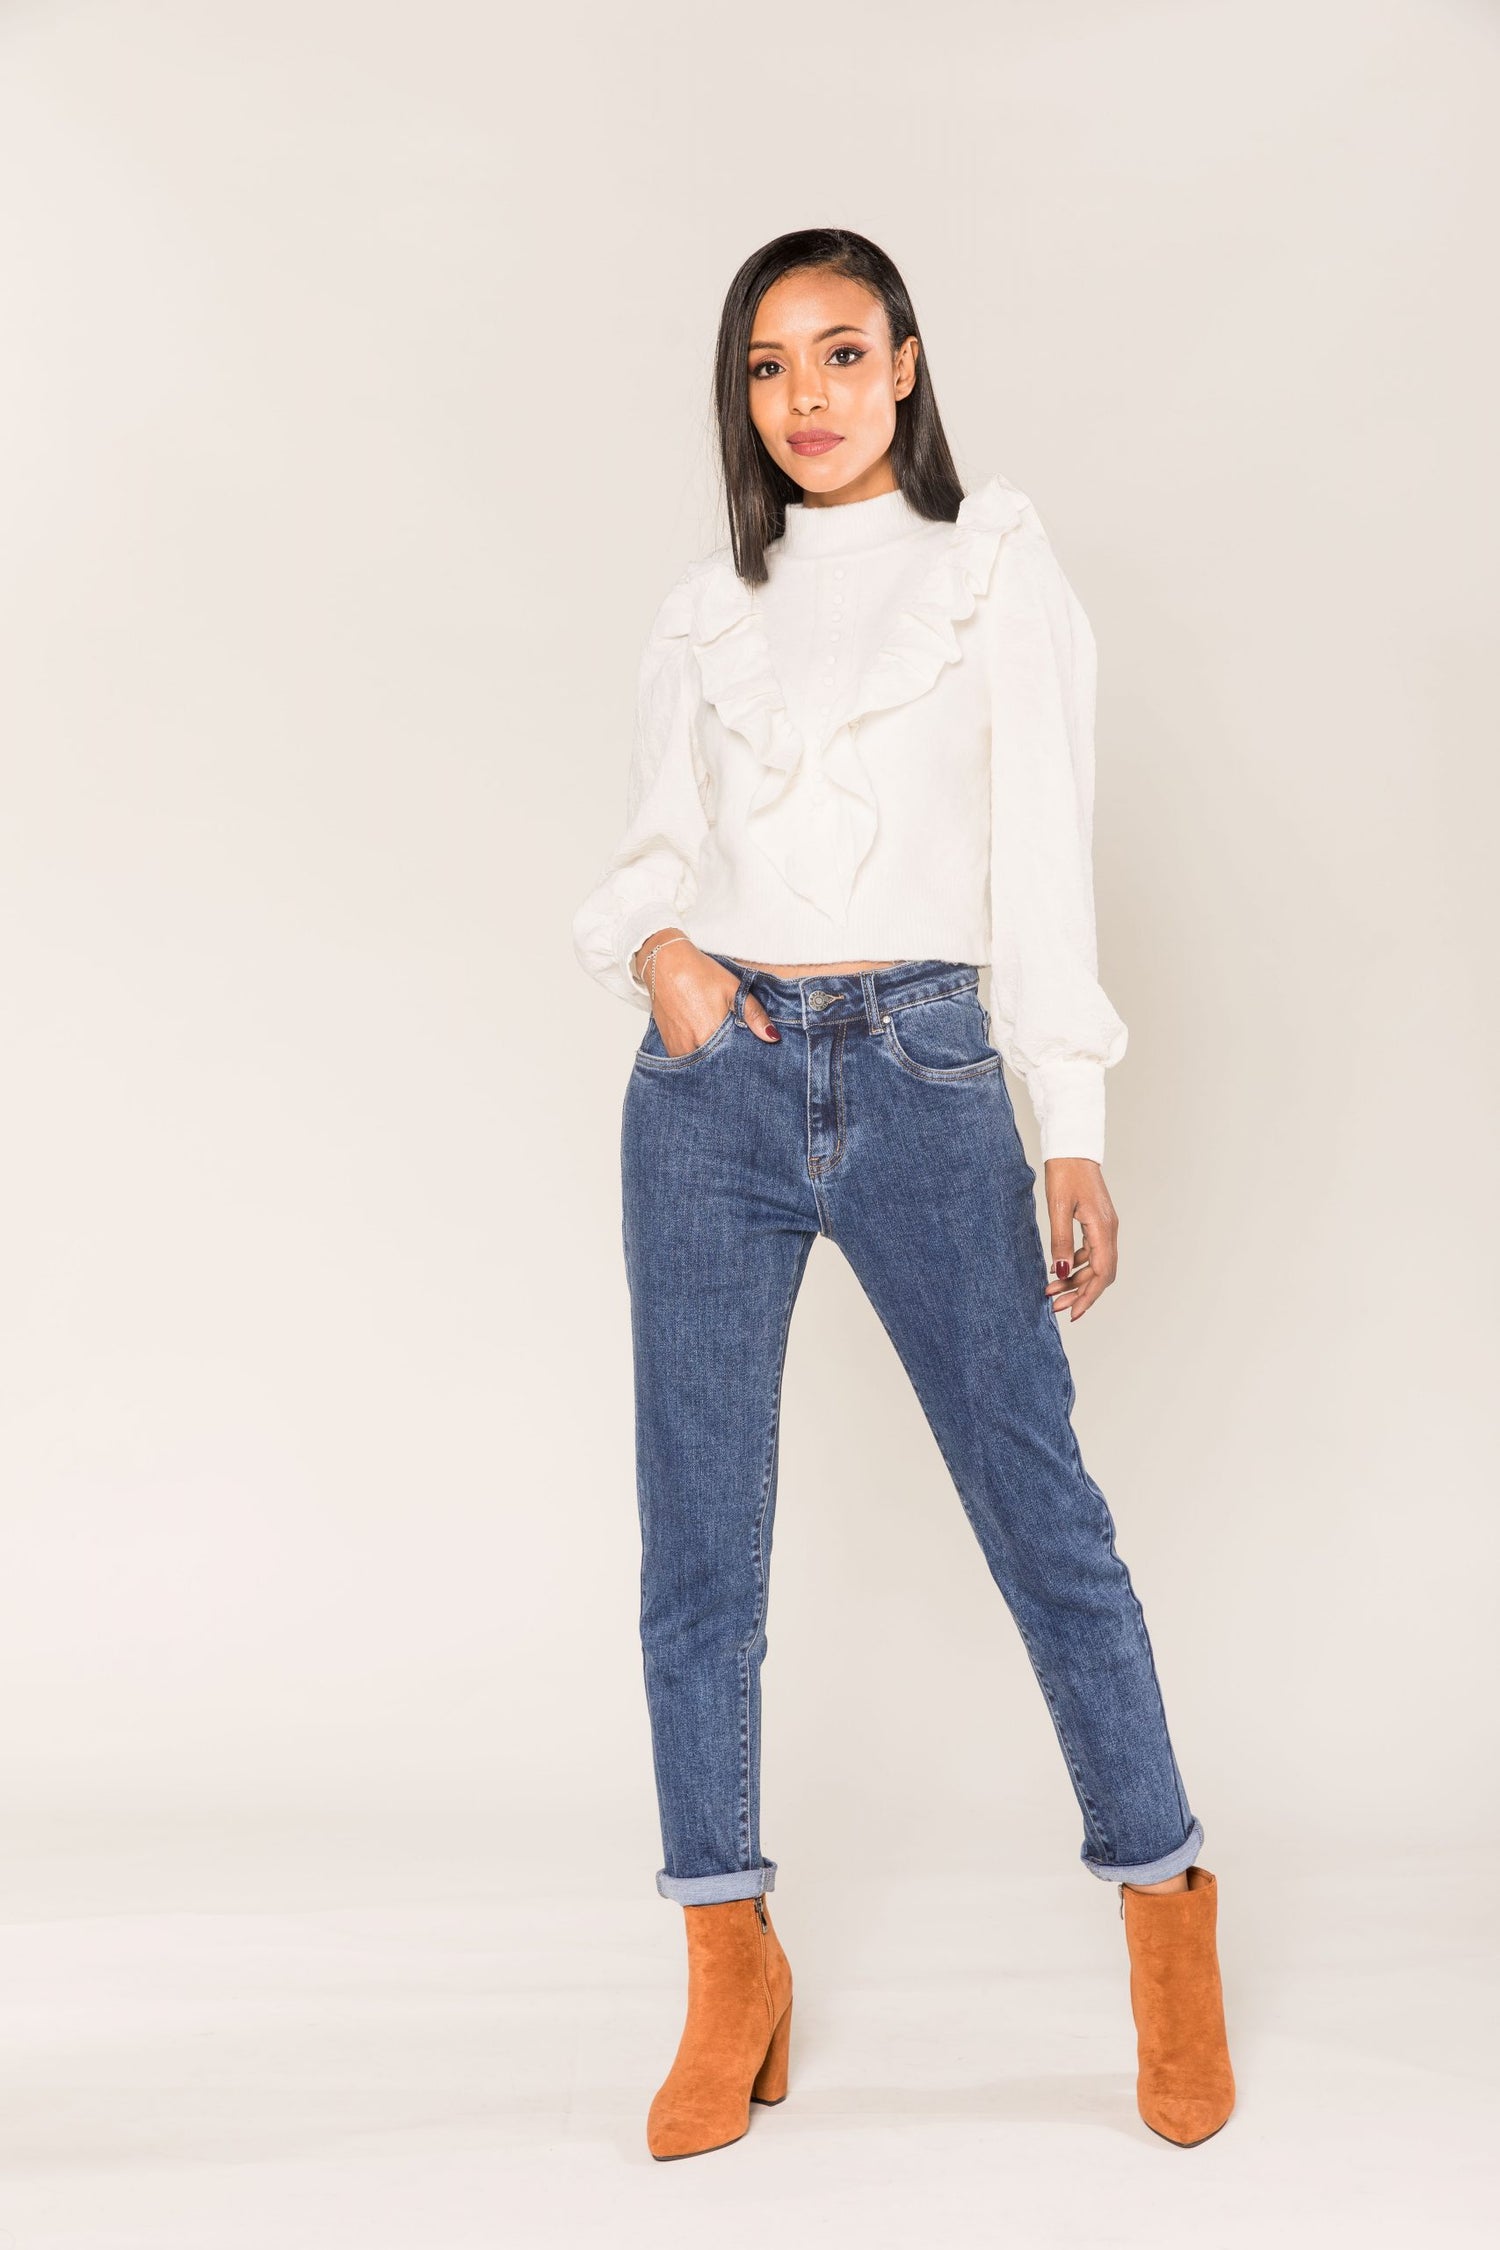 Playsuit & Jumpsuit – G - Look Fashion Ltd. trading as Jeans Gems Wholesale